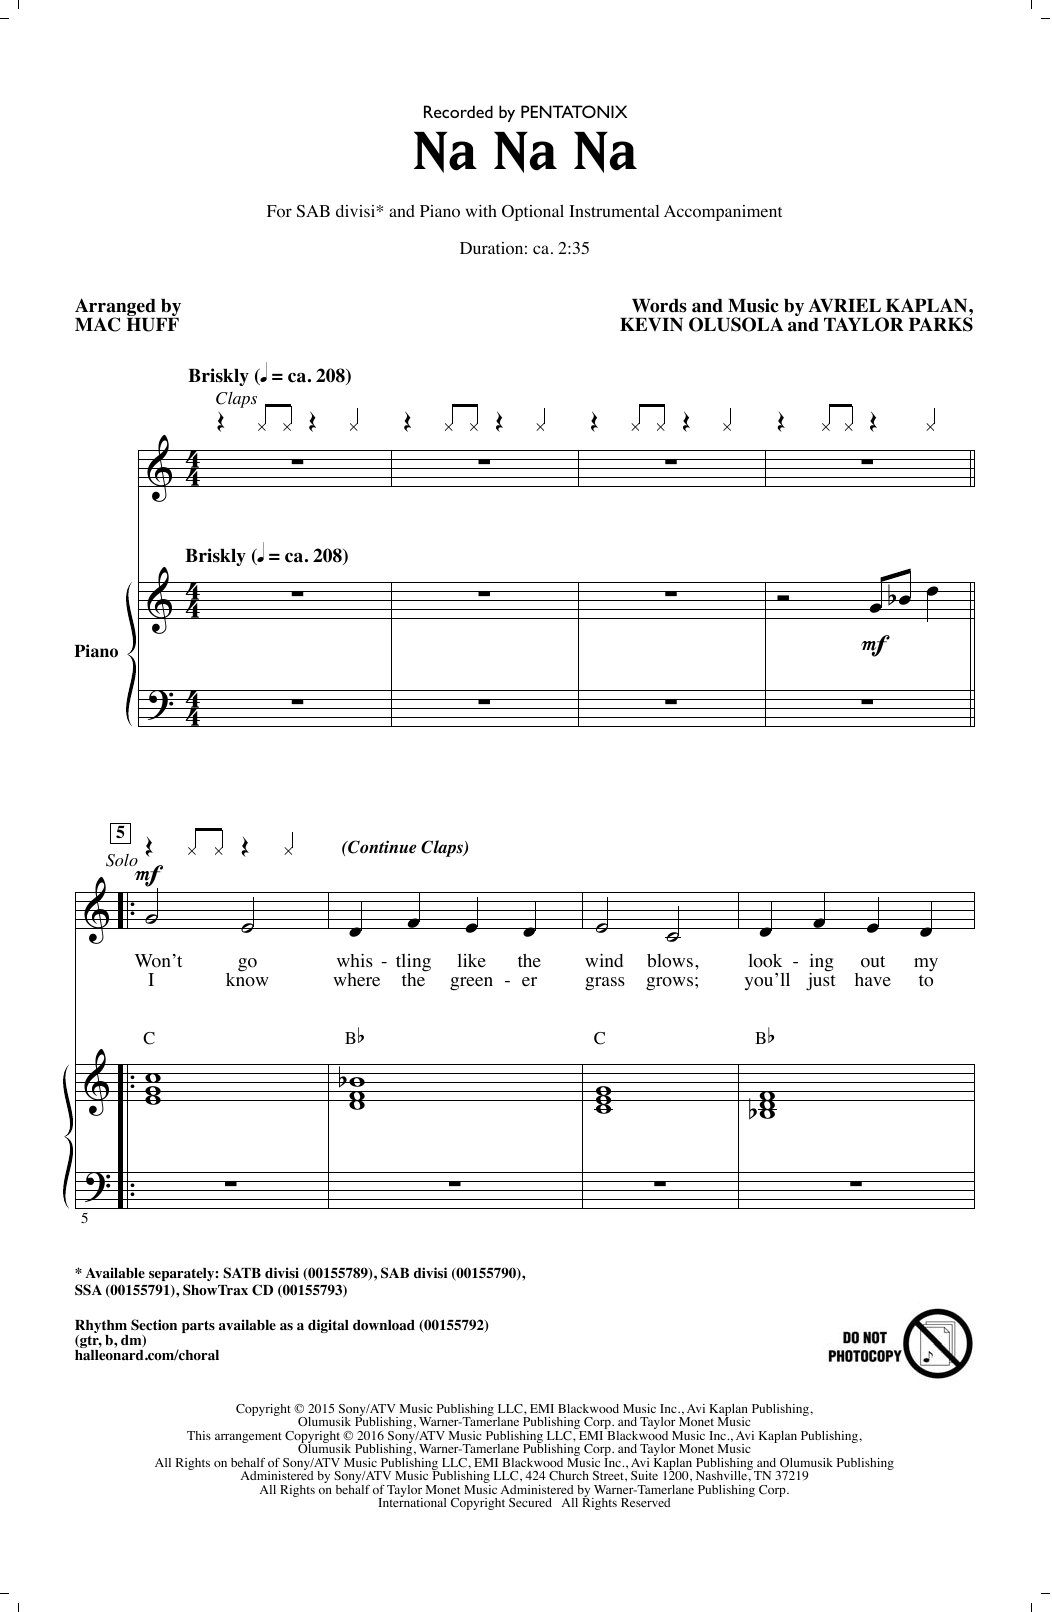 Pentatonix Na Na Na (arr. Mac Huff) Sheet Music Notes & Chords for SSA - Download or Print PDF